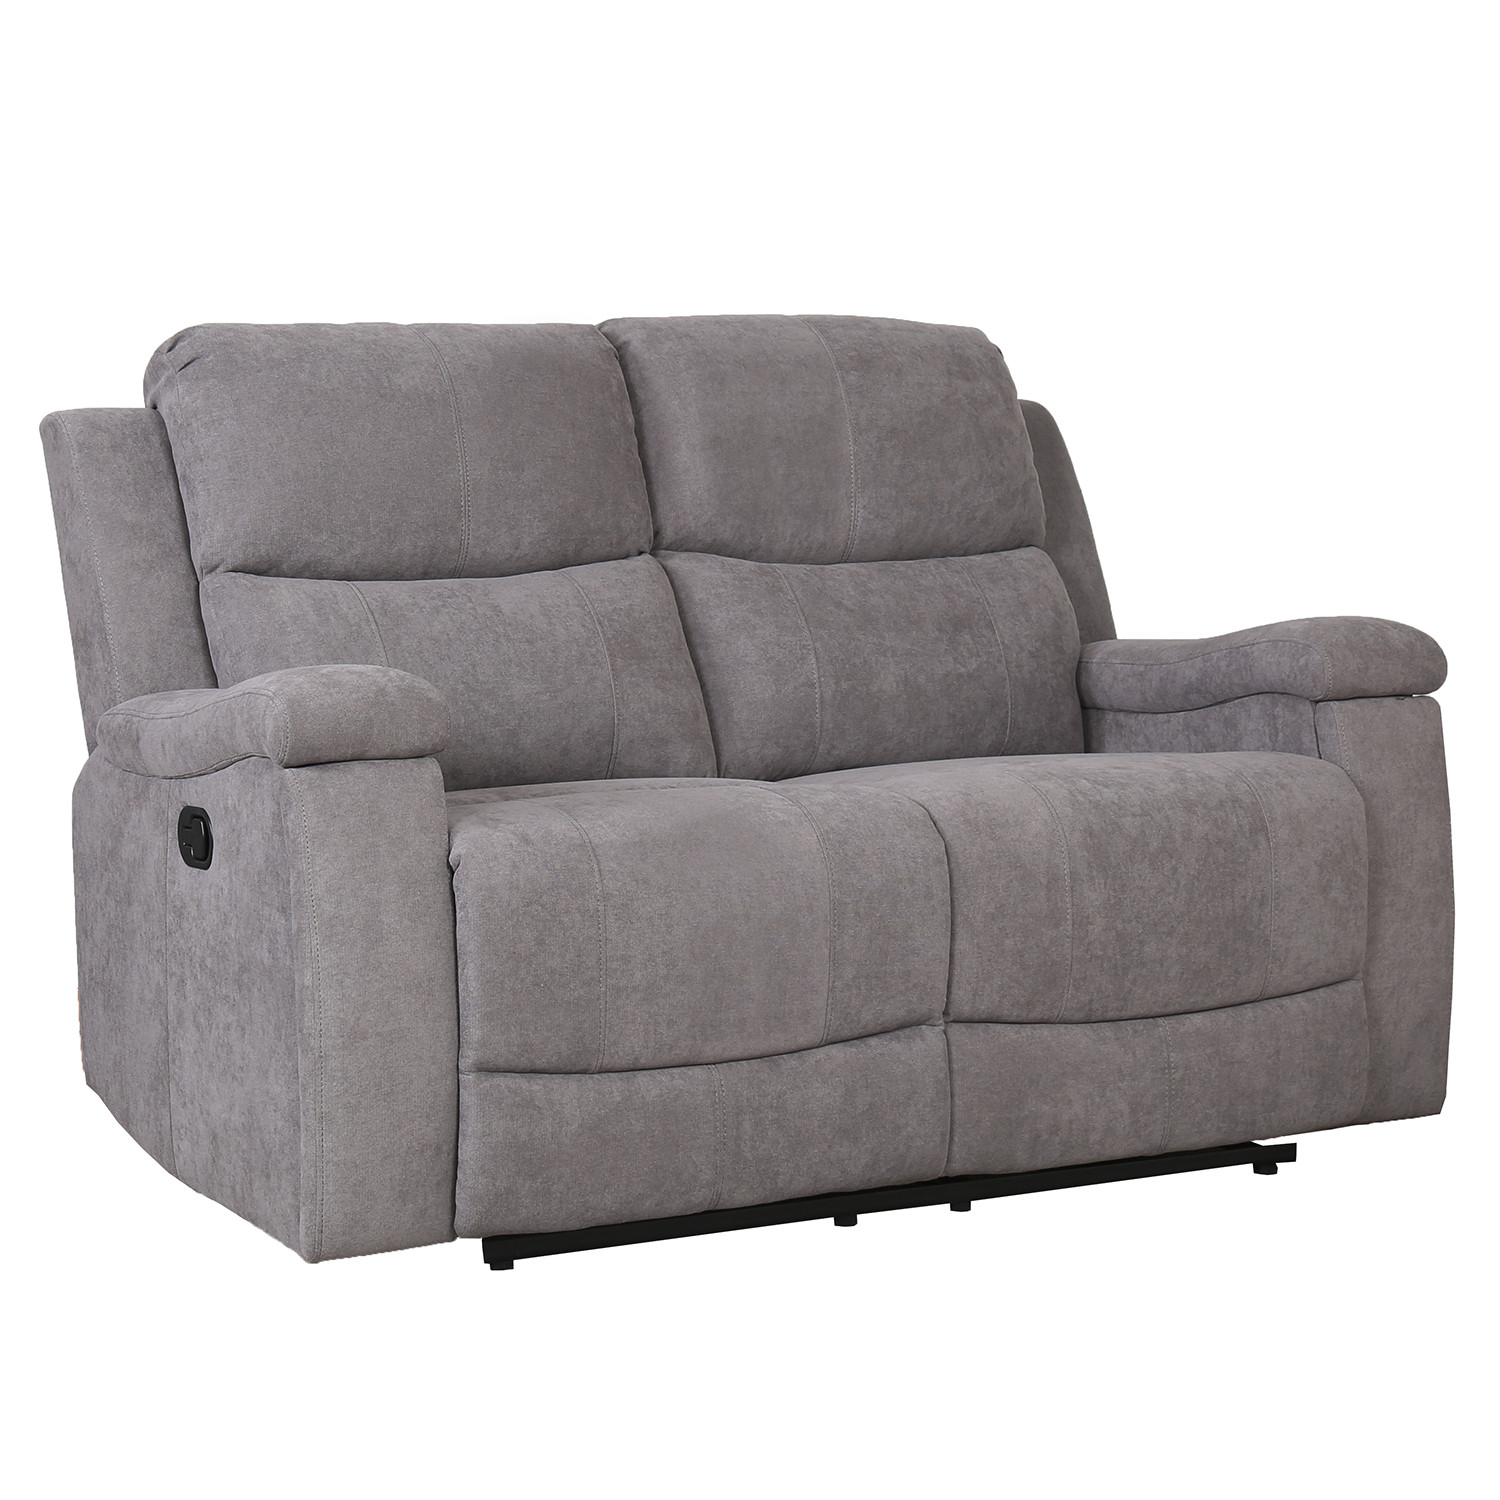 Ledbury 2 Seater Grey Fabric Manual Recliner Sofa Image 2